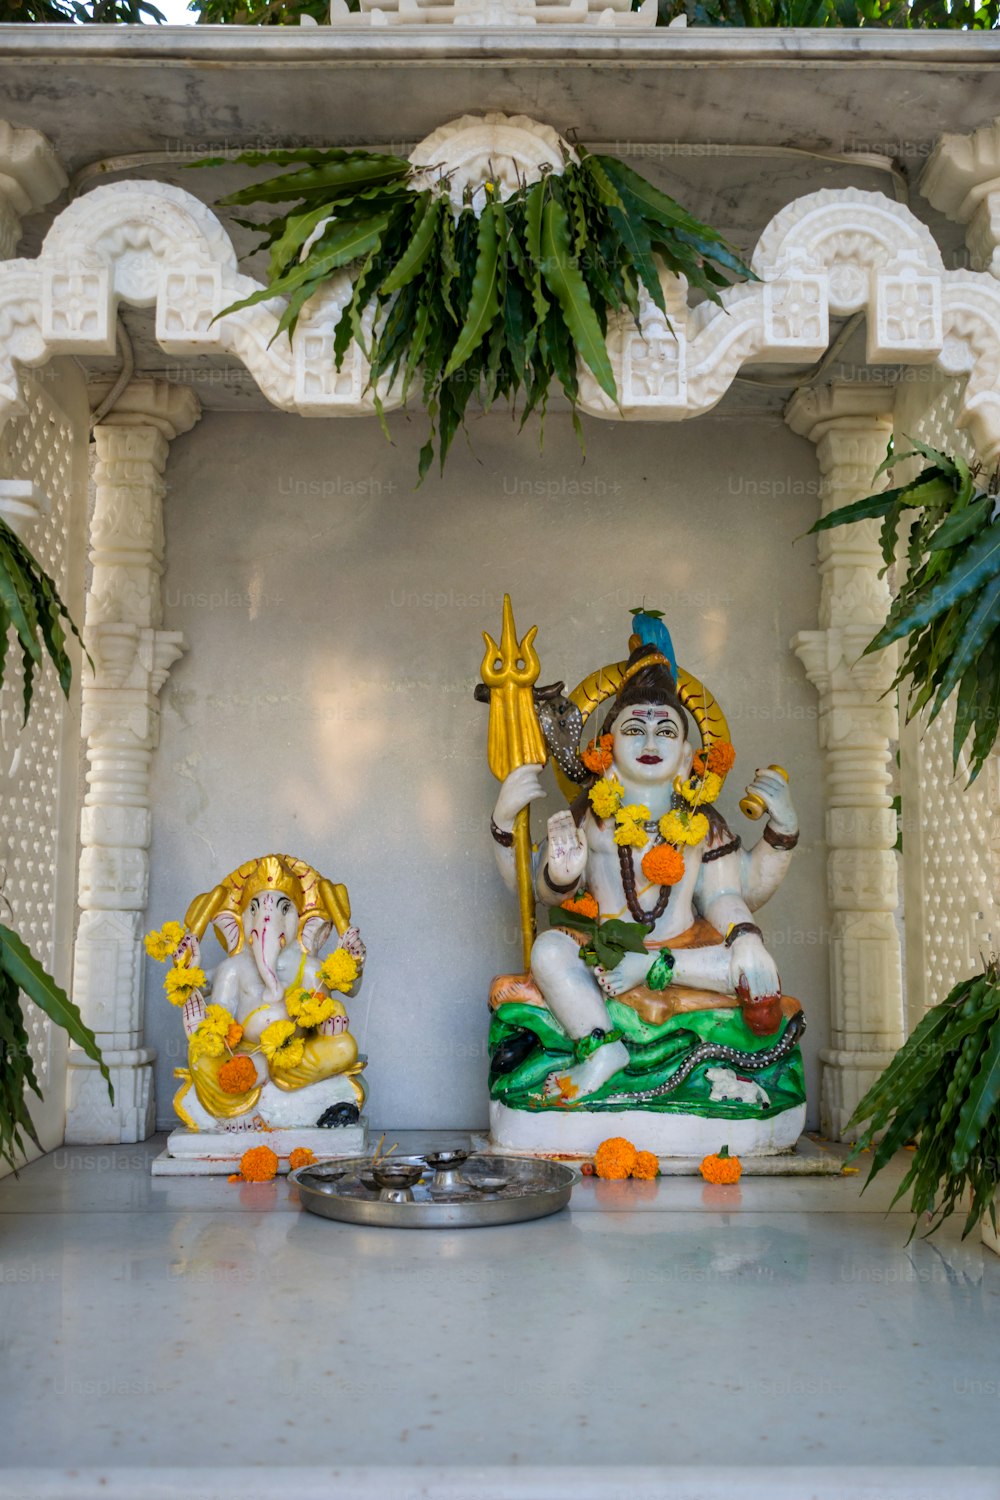 500+ Ganesh Chaturthi Pictures  Download Free Images on Unsplash